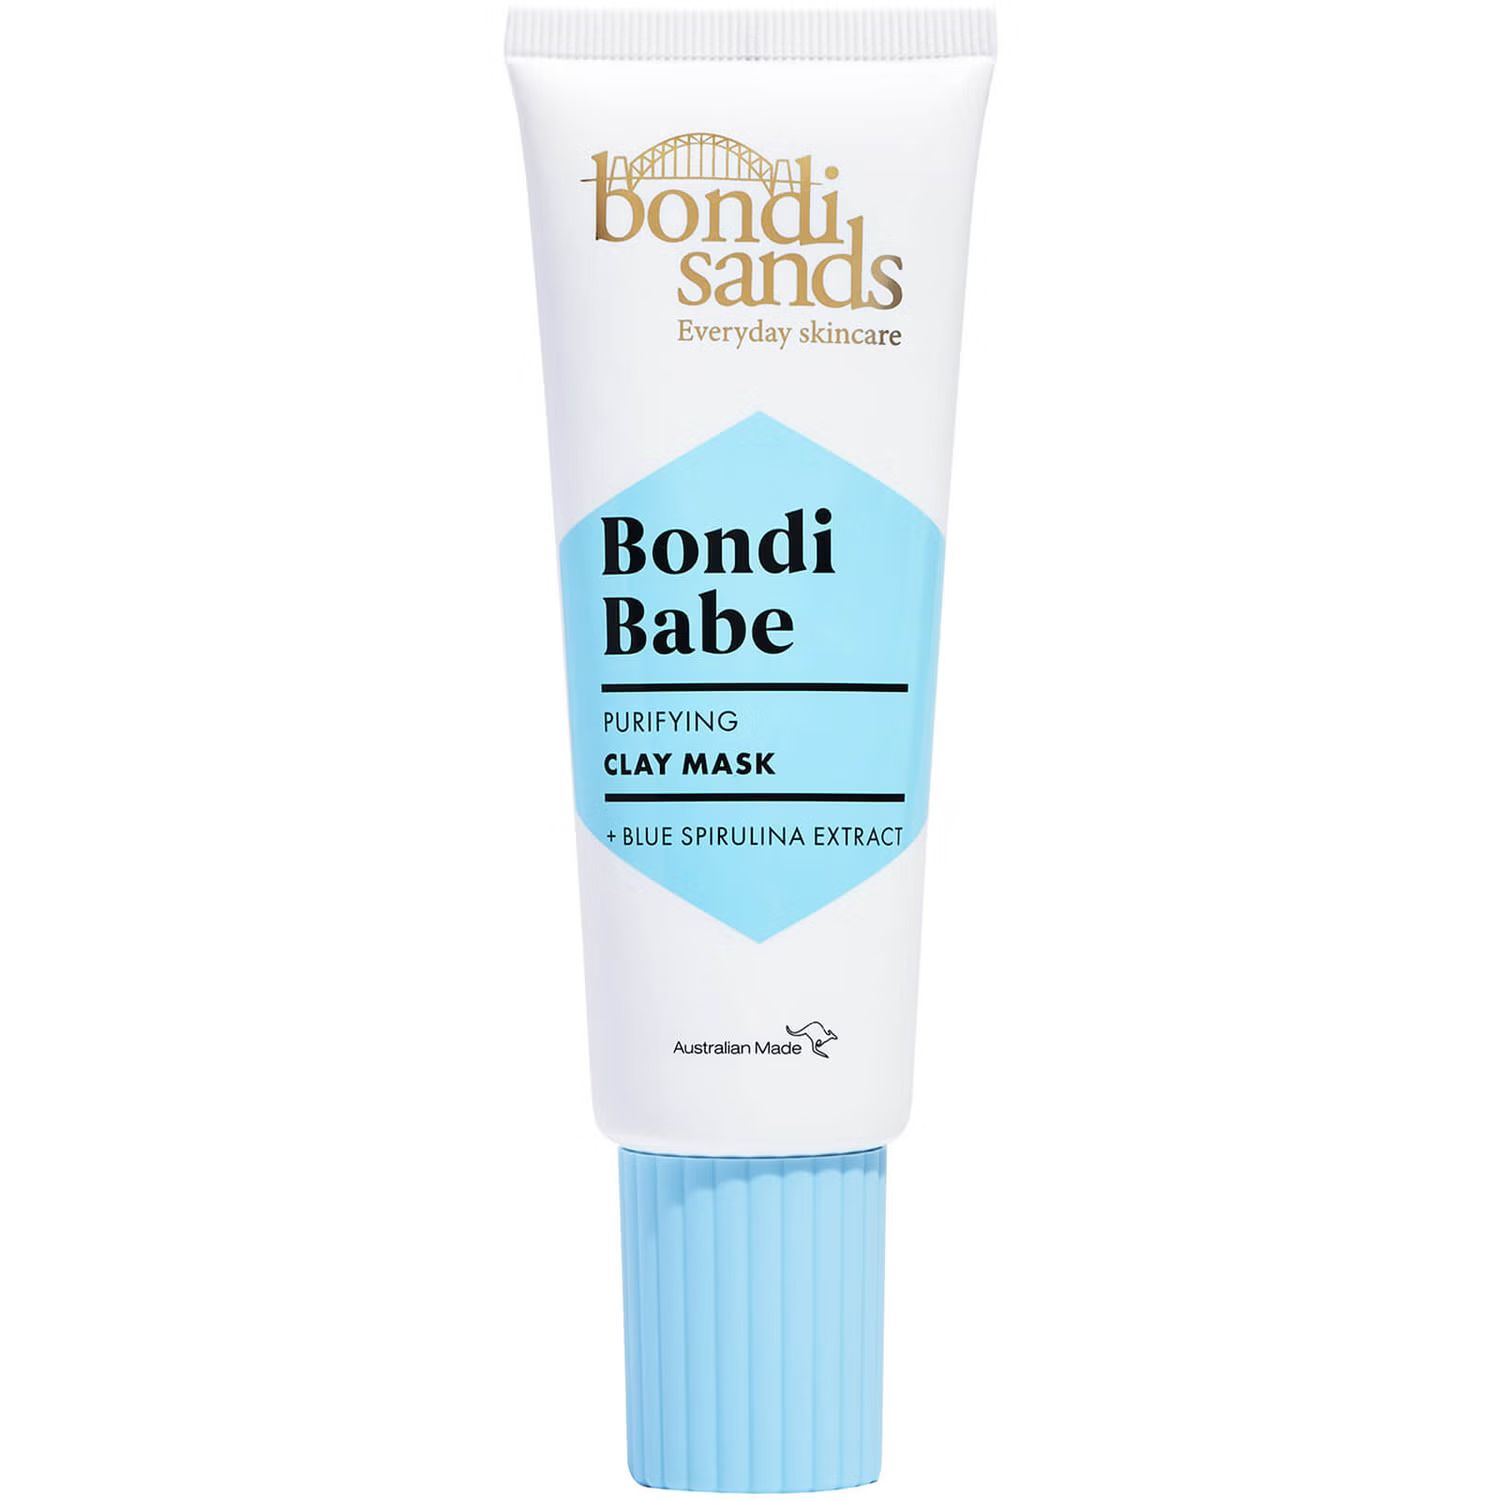 Bondi Sands Bondi Babe Clay Mask 75ml | Cult Beauty (Global)